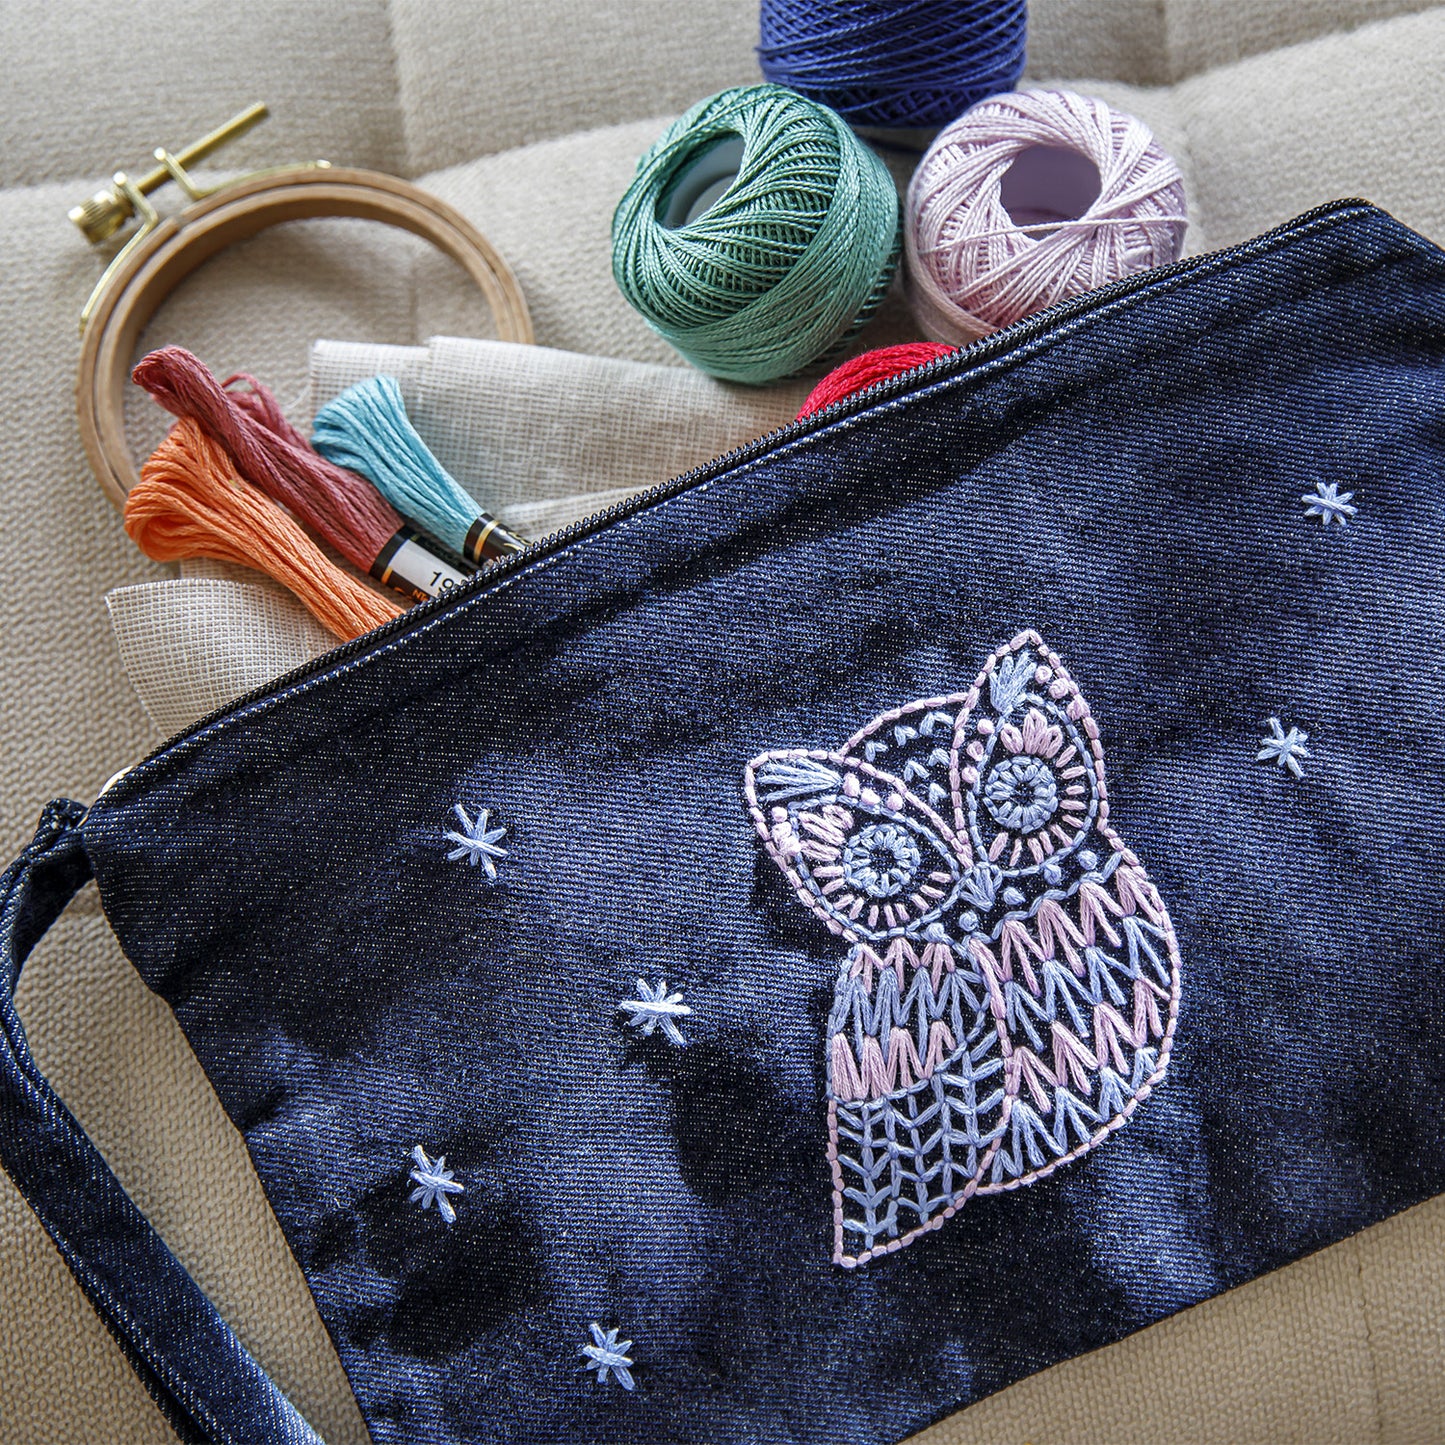 PREORDER - Learn Embroidery Stitch by Stitch with Missouri Star Alternative View #25